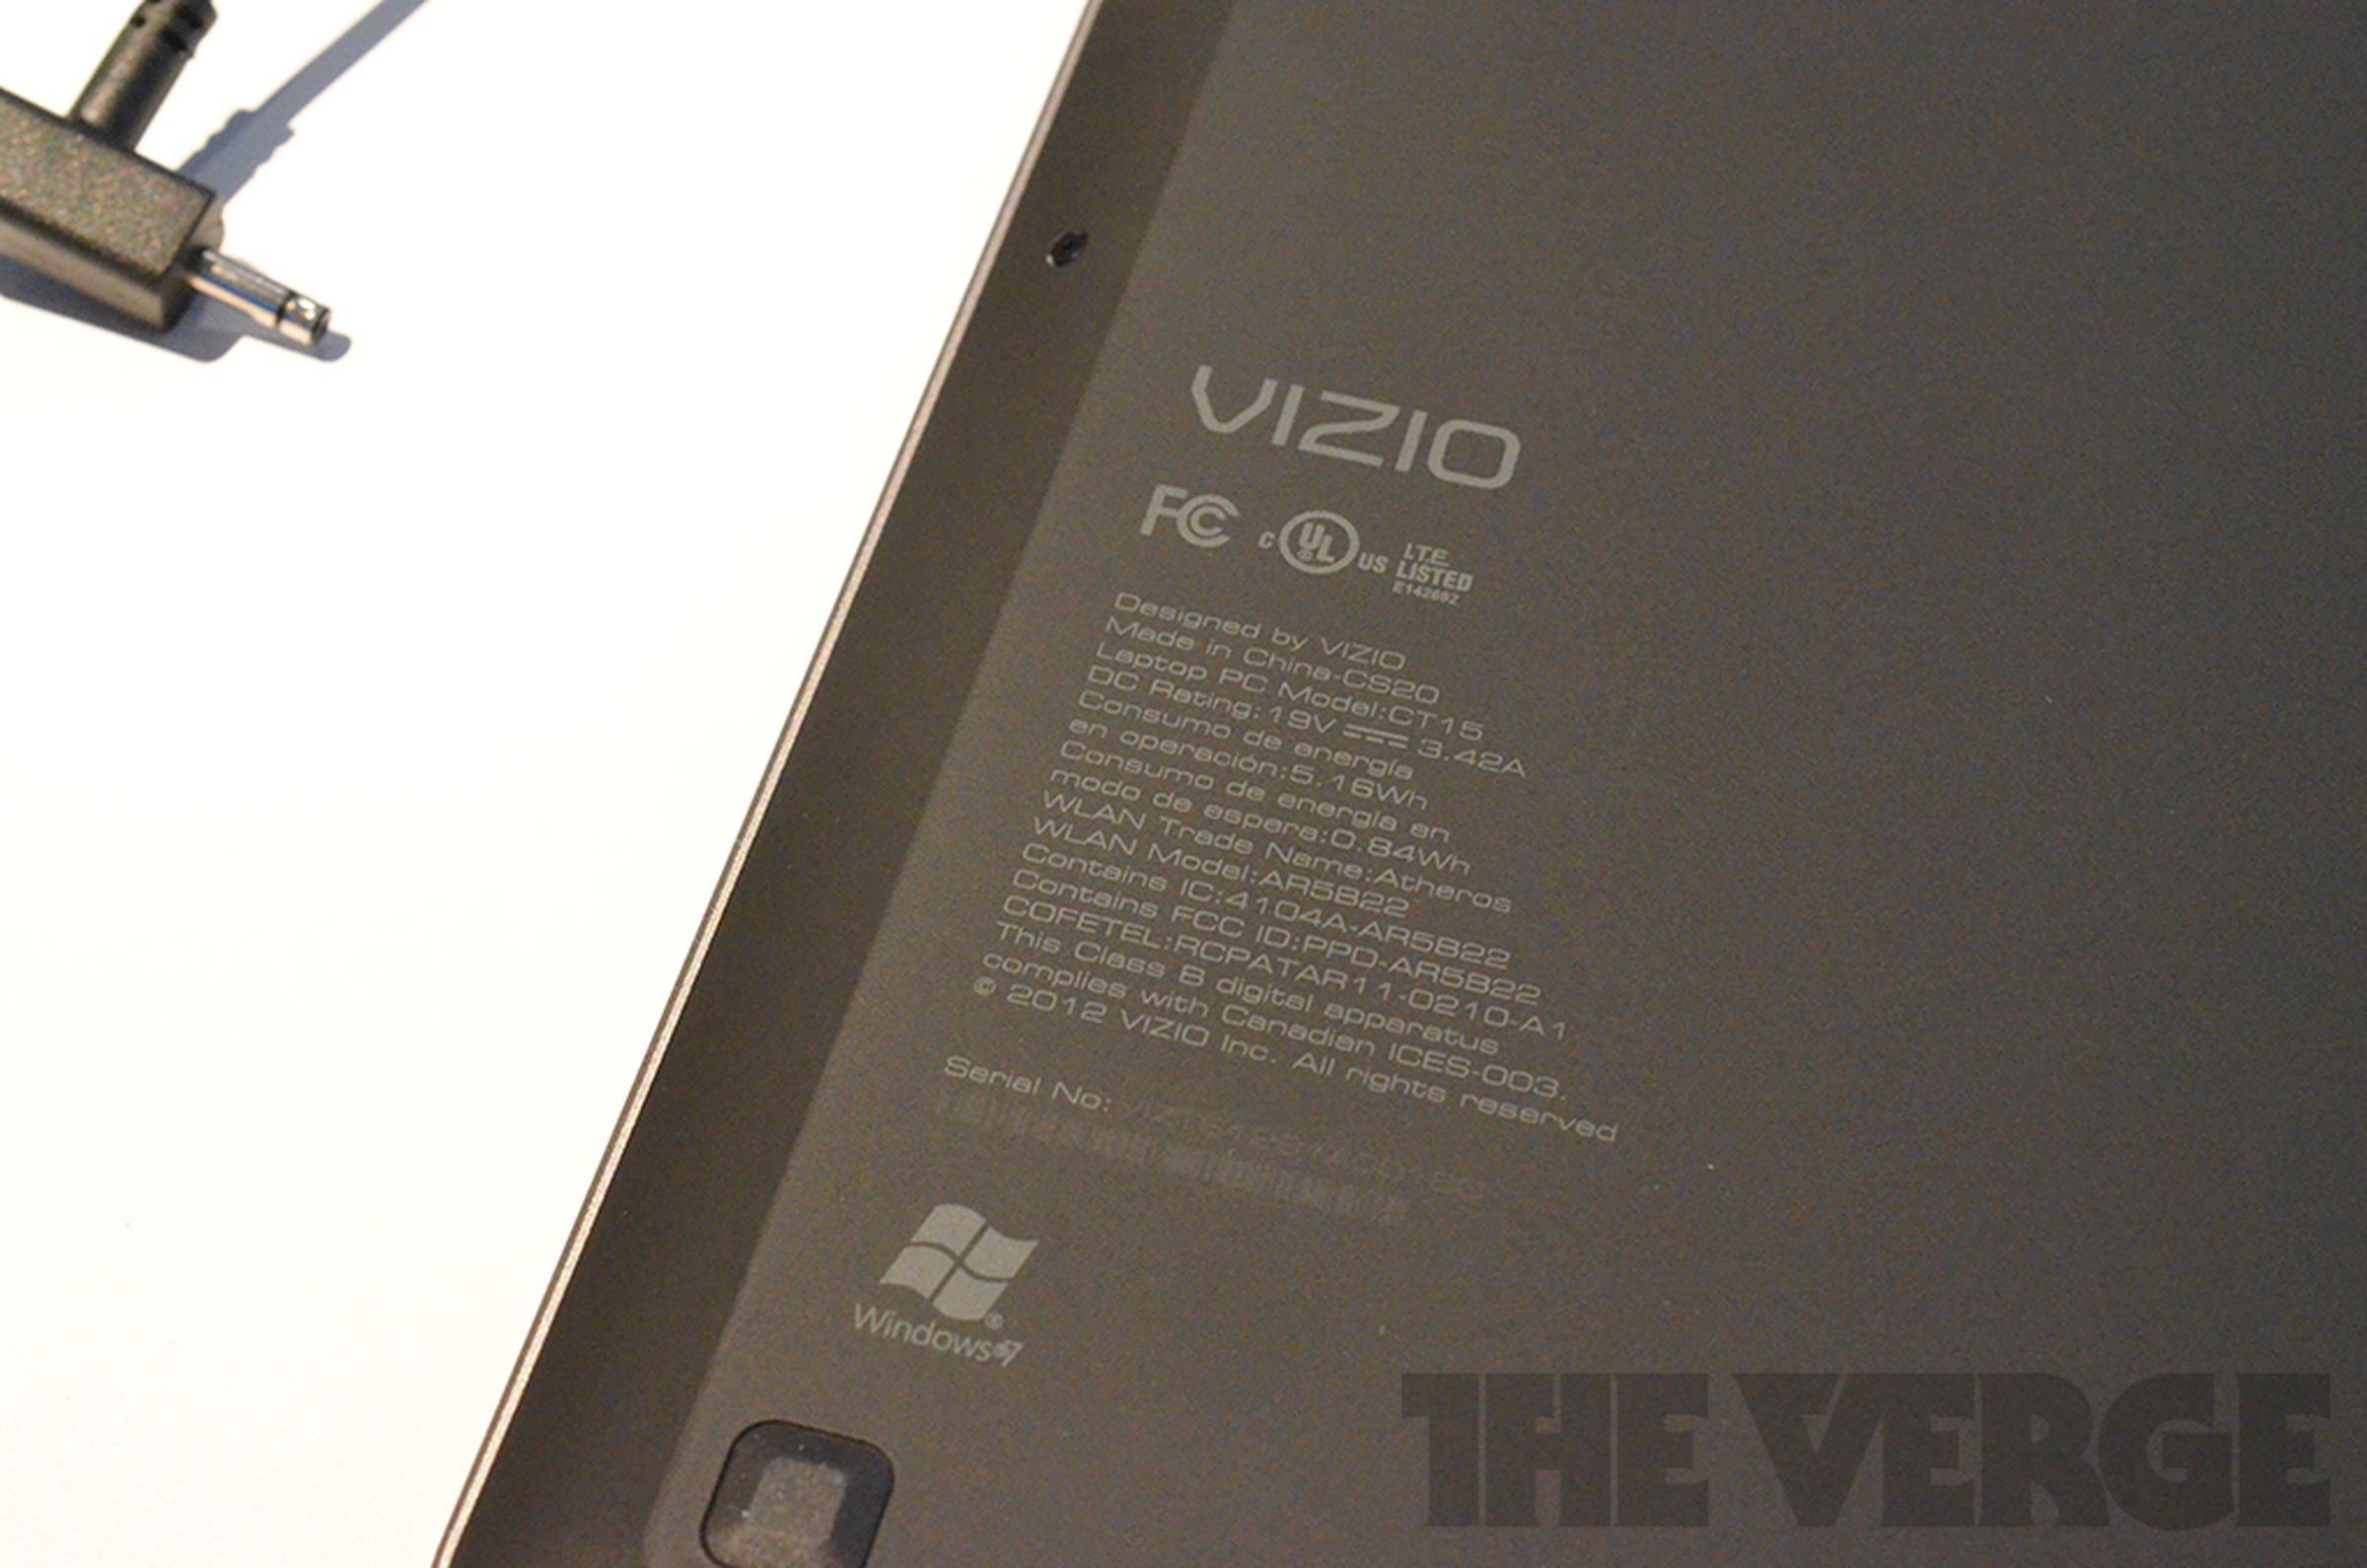 Vizio Thin-and-Light Ultrabooks hands-on photos